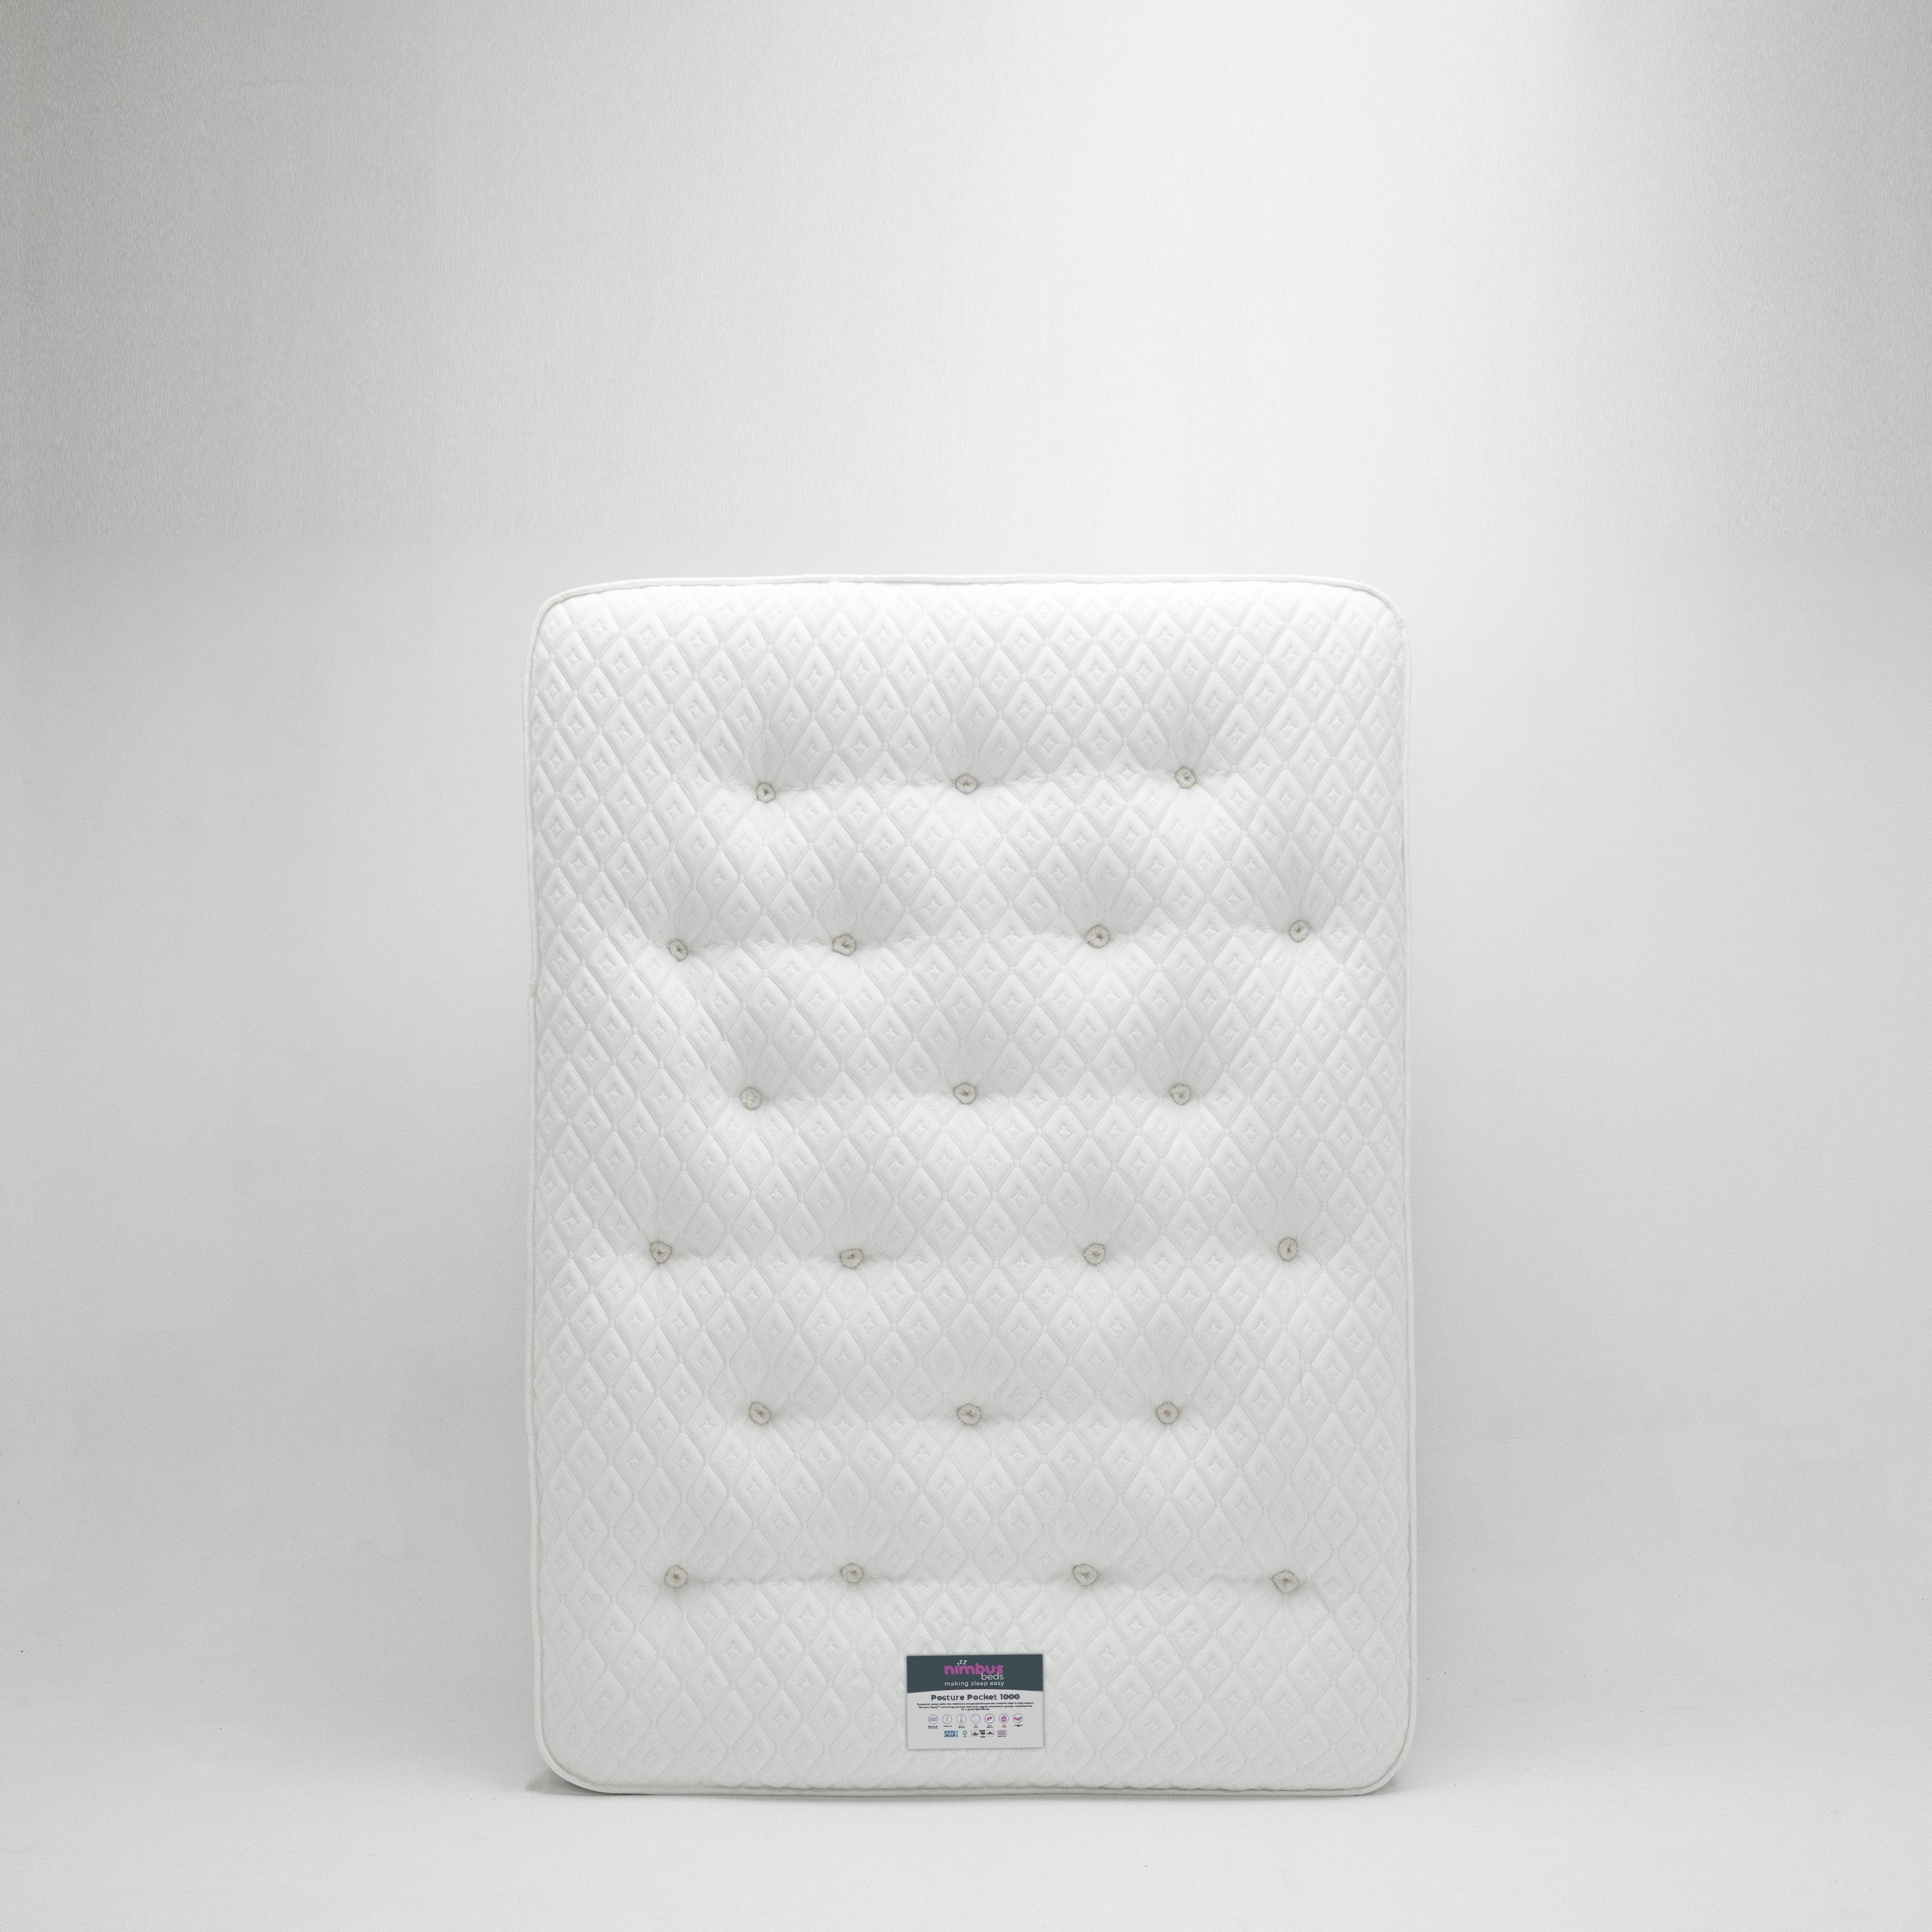 The Posture Pocket 1000 Mattress - Nimbus Beds